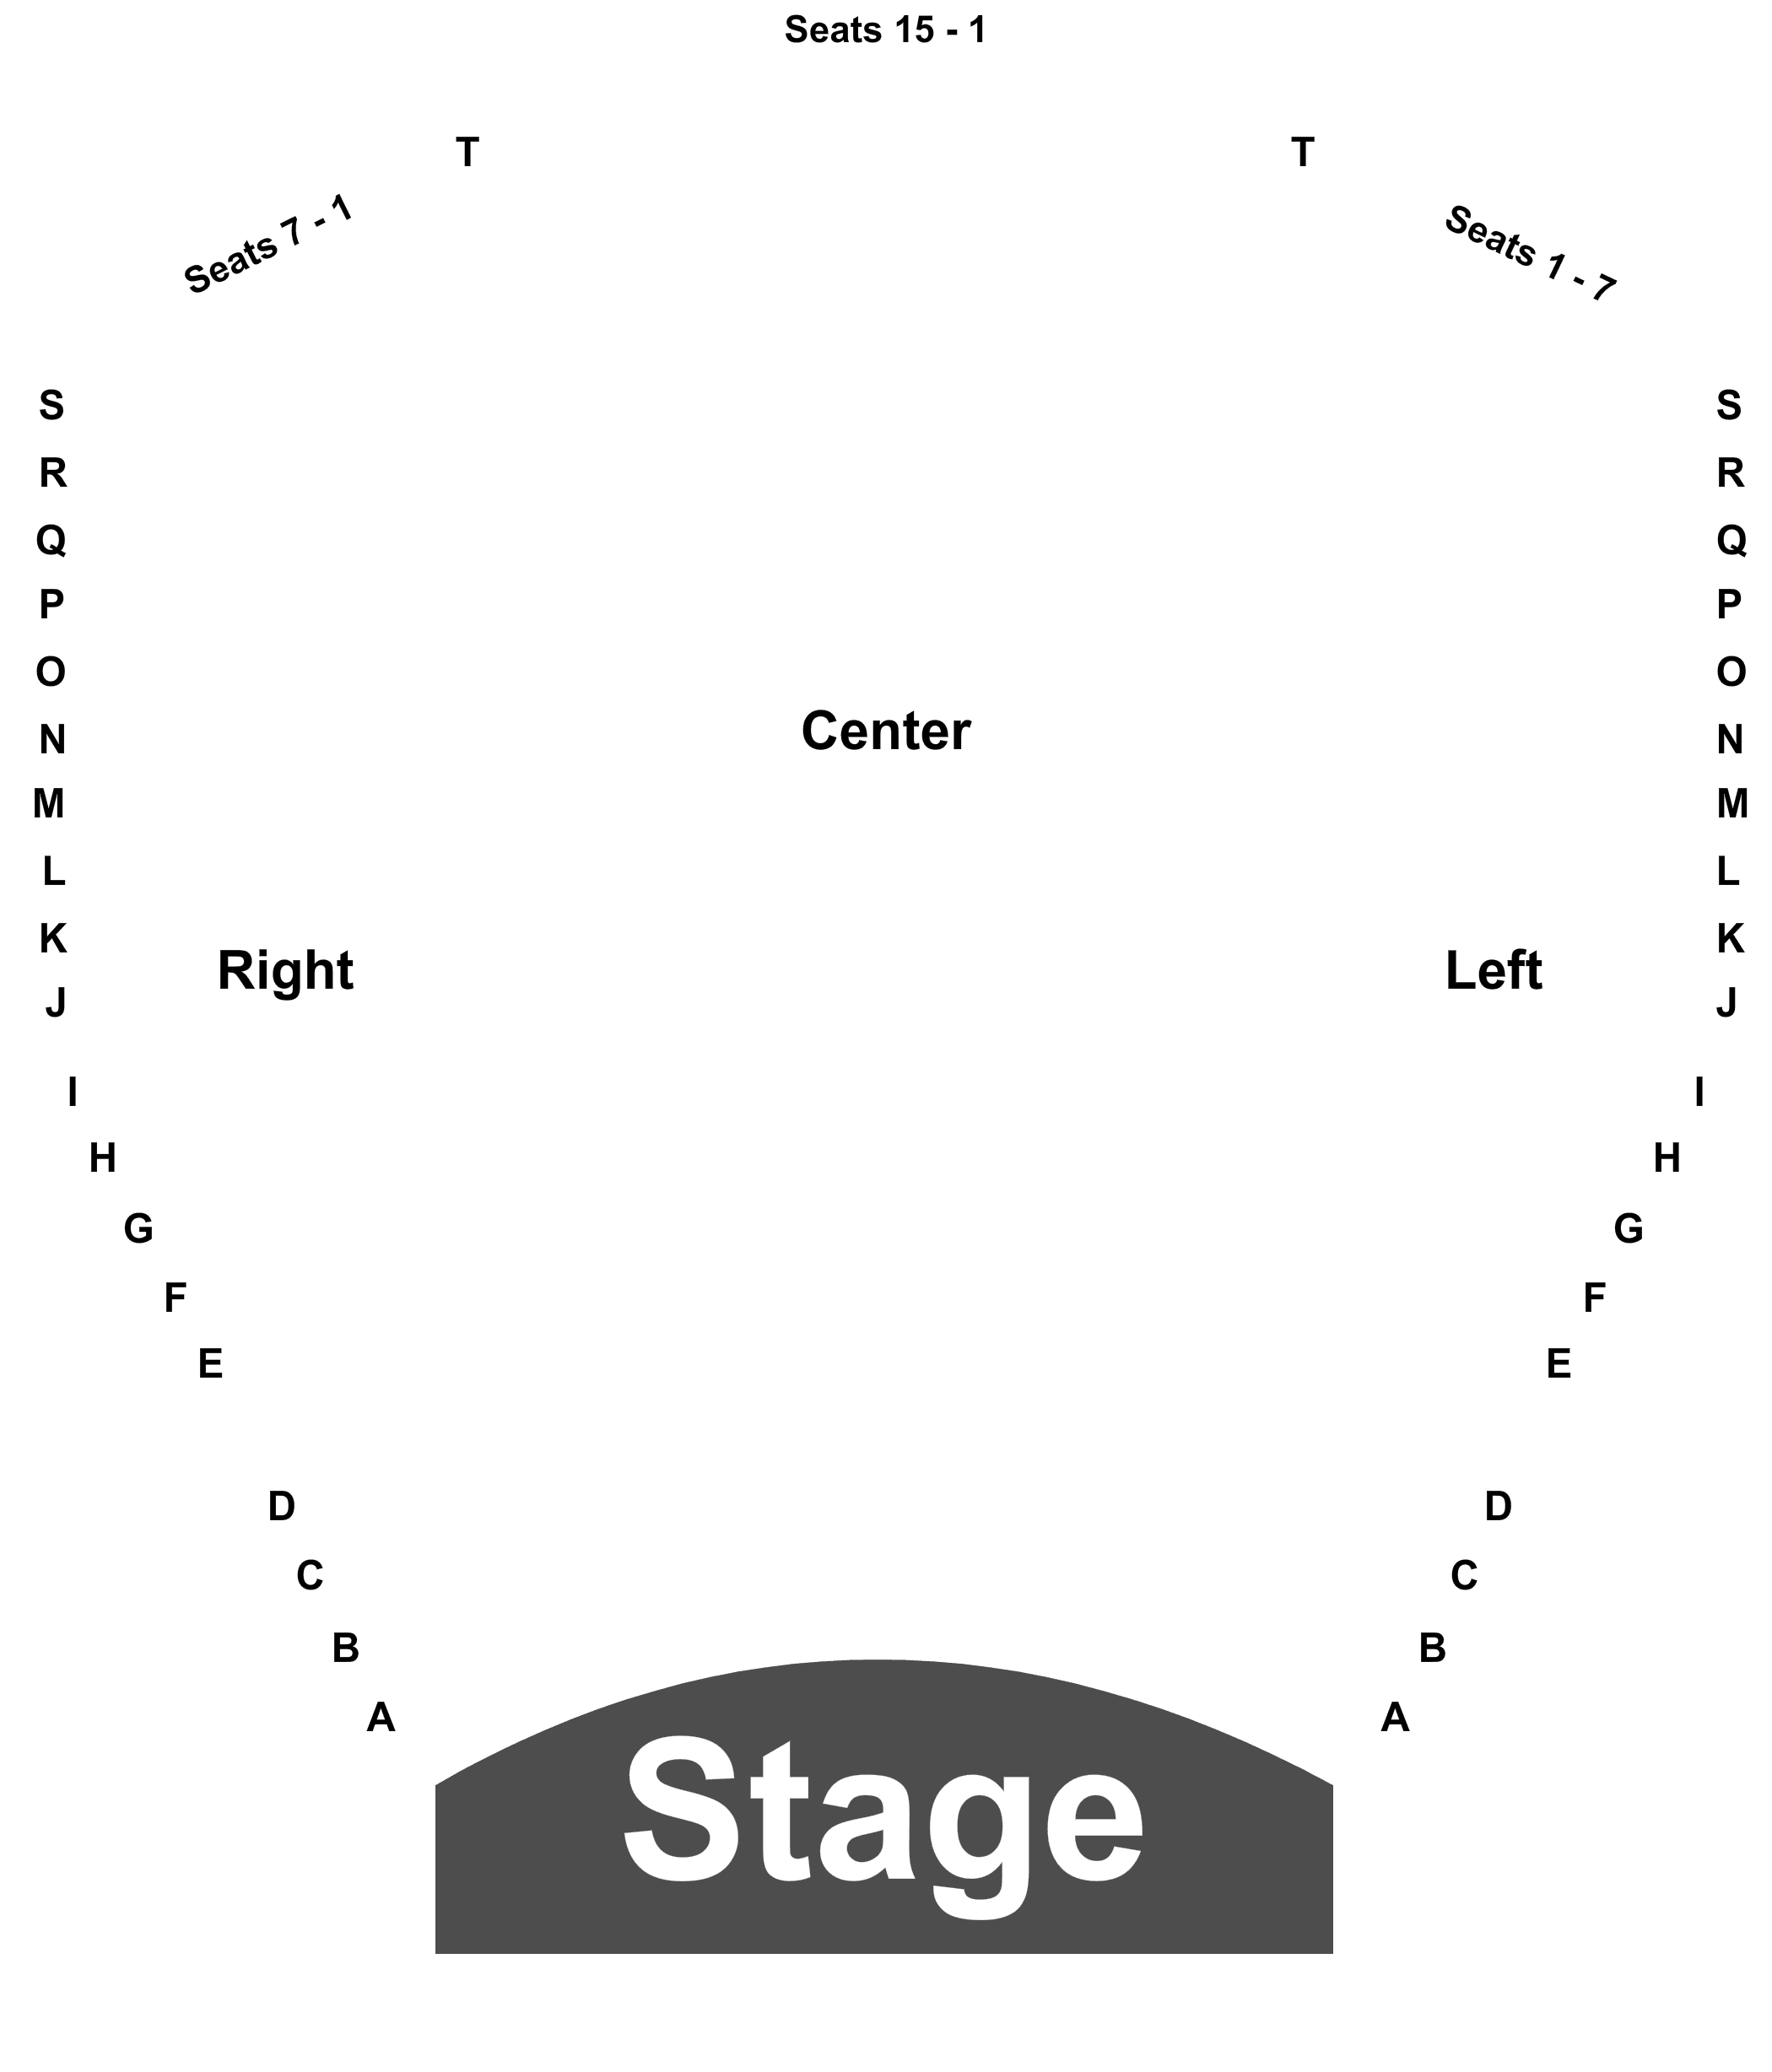 Tulsa Performing Arts Center Seating Chart